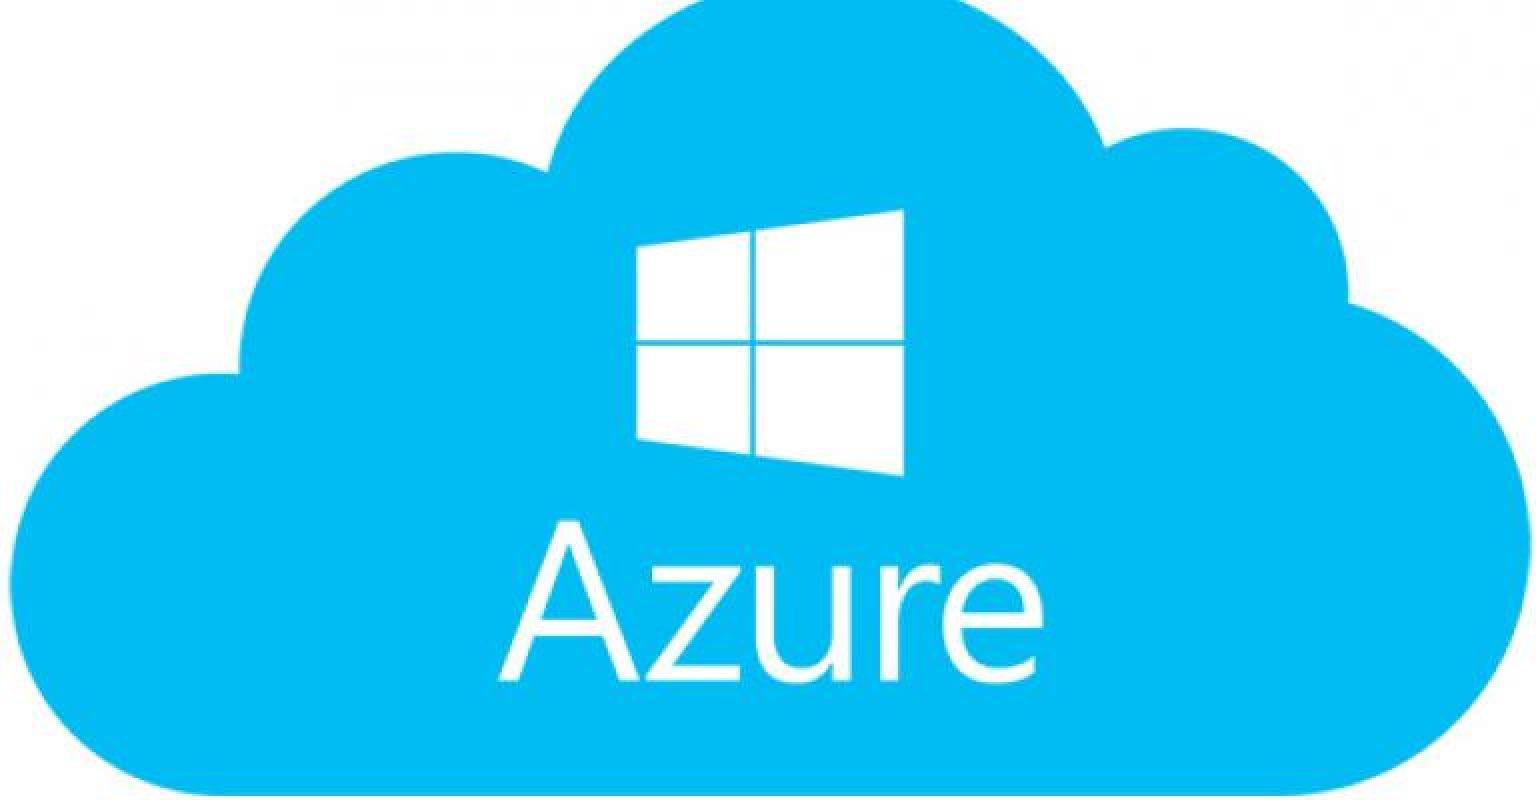 Microsoft Azure training for Beginners in Evansville | Microsoft Azure Fundamentals | Azure cloud computing training | Microsoft Azure Fundamentals AZ-900 Certification Exam Prep (Preparation) Training Course